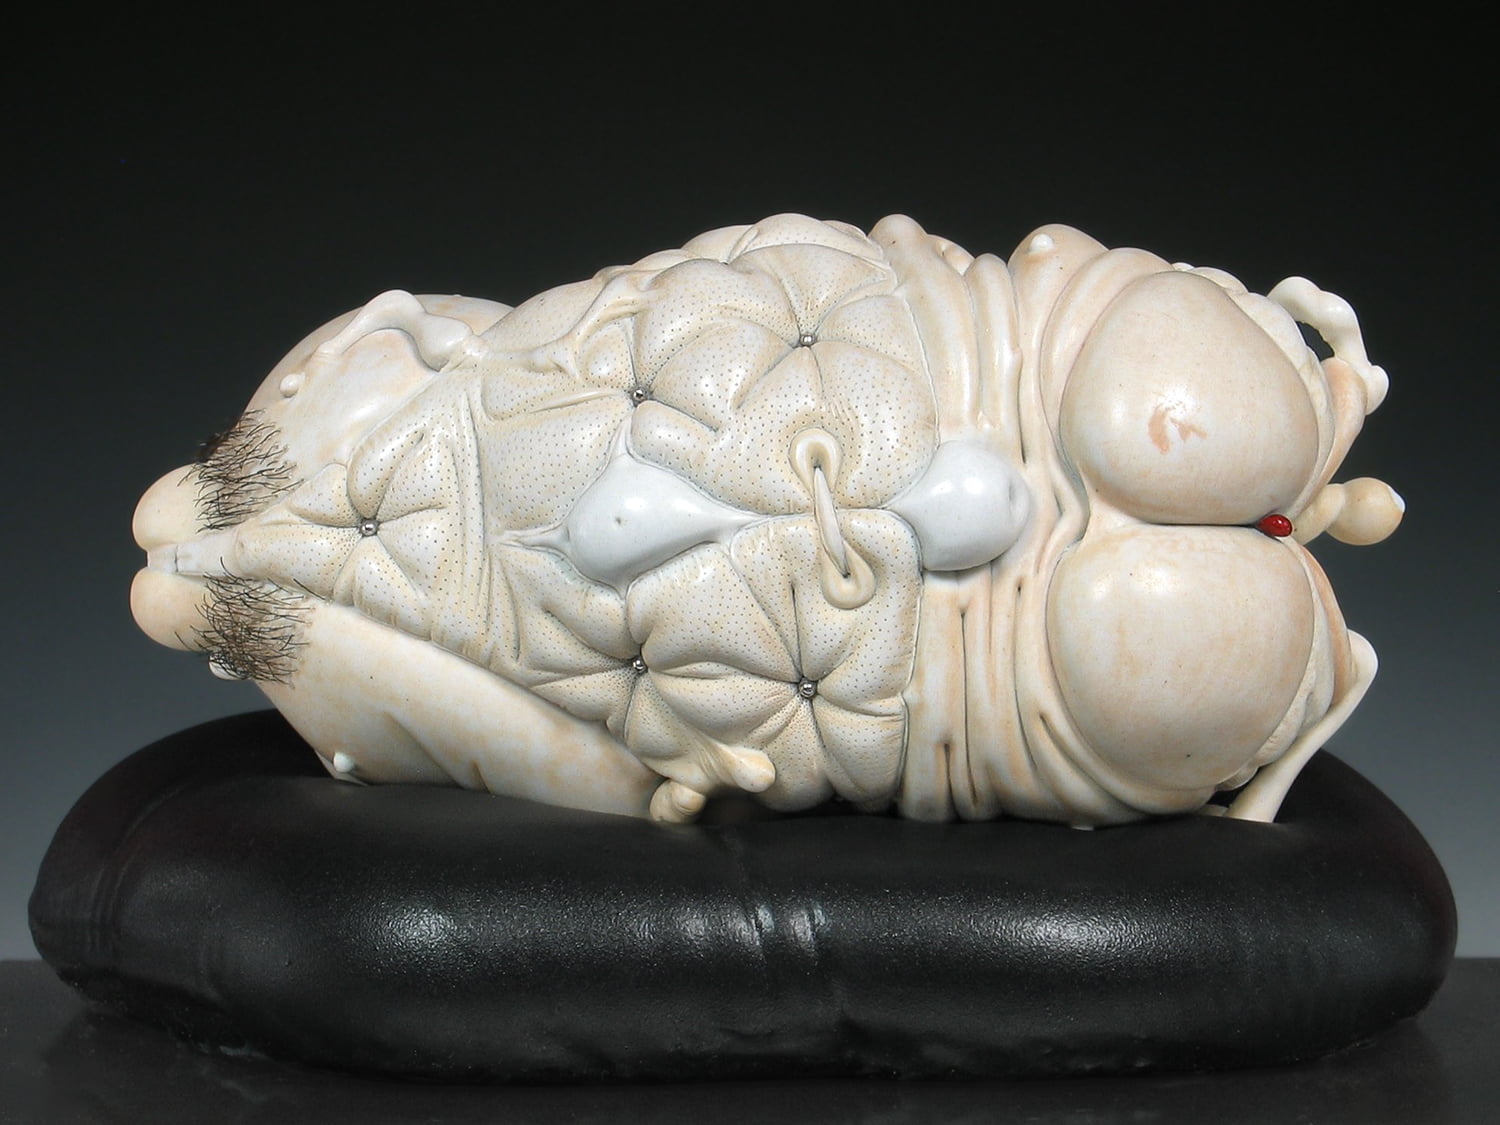 Jason Briggs "Cinch" (alternate view). Porcelain, hair, and mixed media sculptural ceramic art.